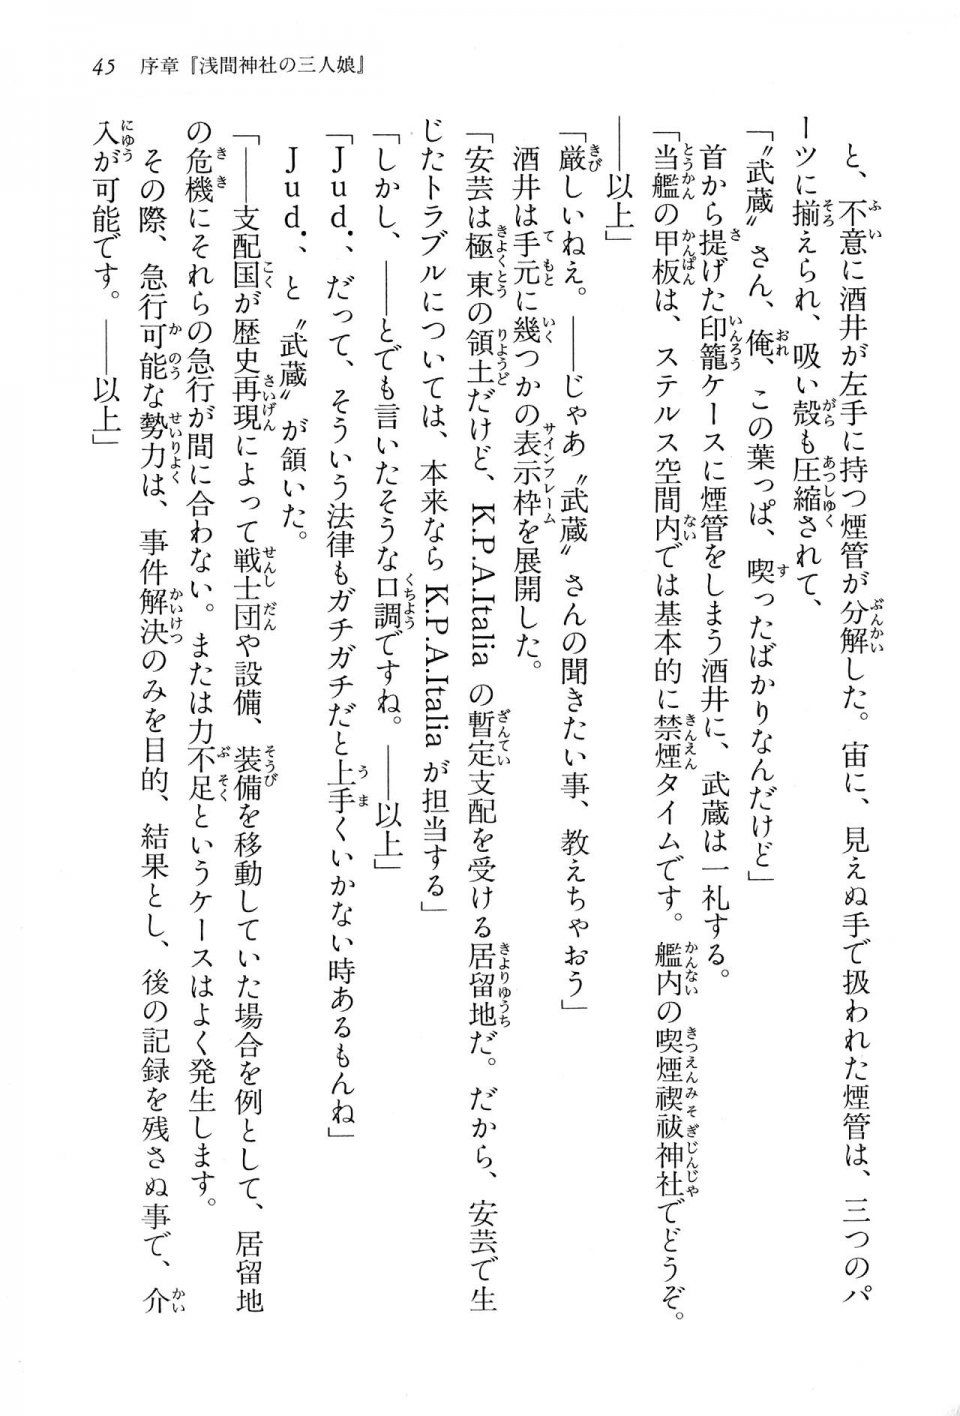 Kyoukai Senjou no Horizon BD Special Mininovel Vol 1(1A) - Photo #49